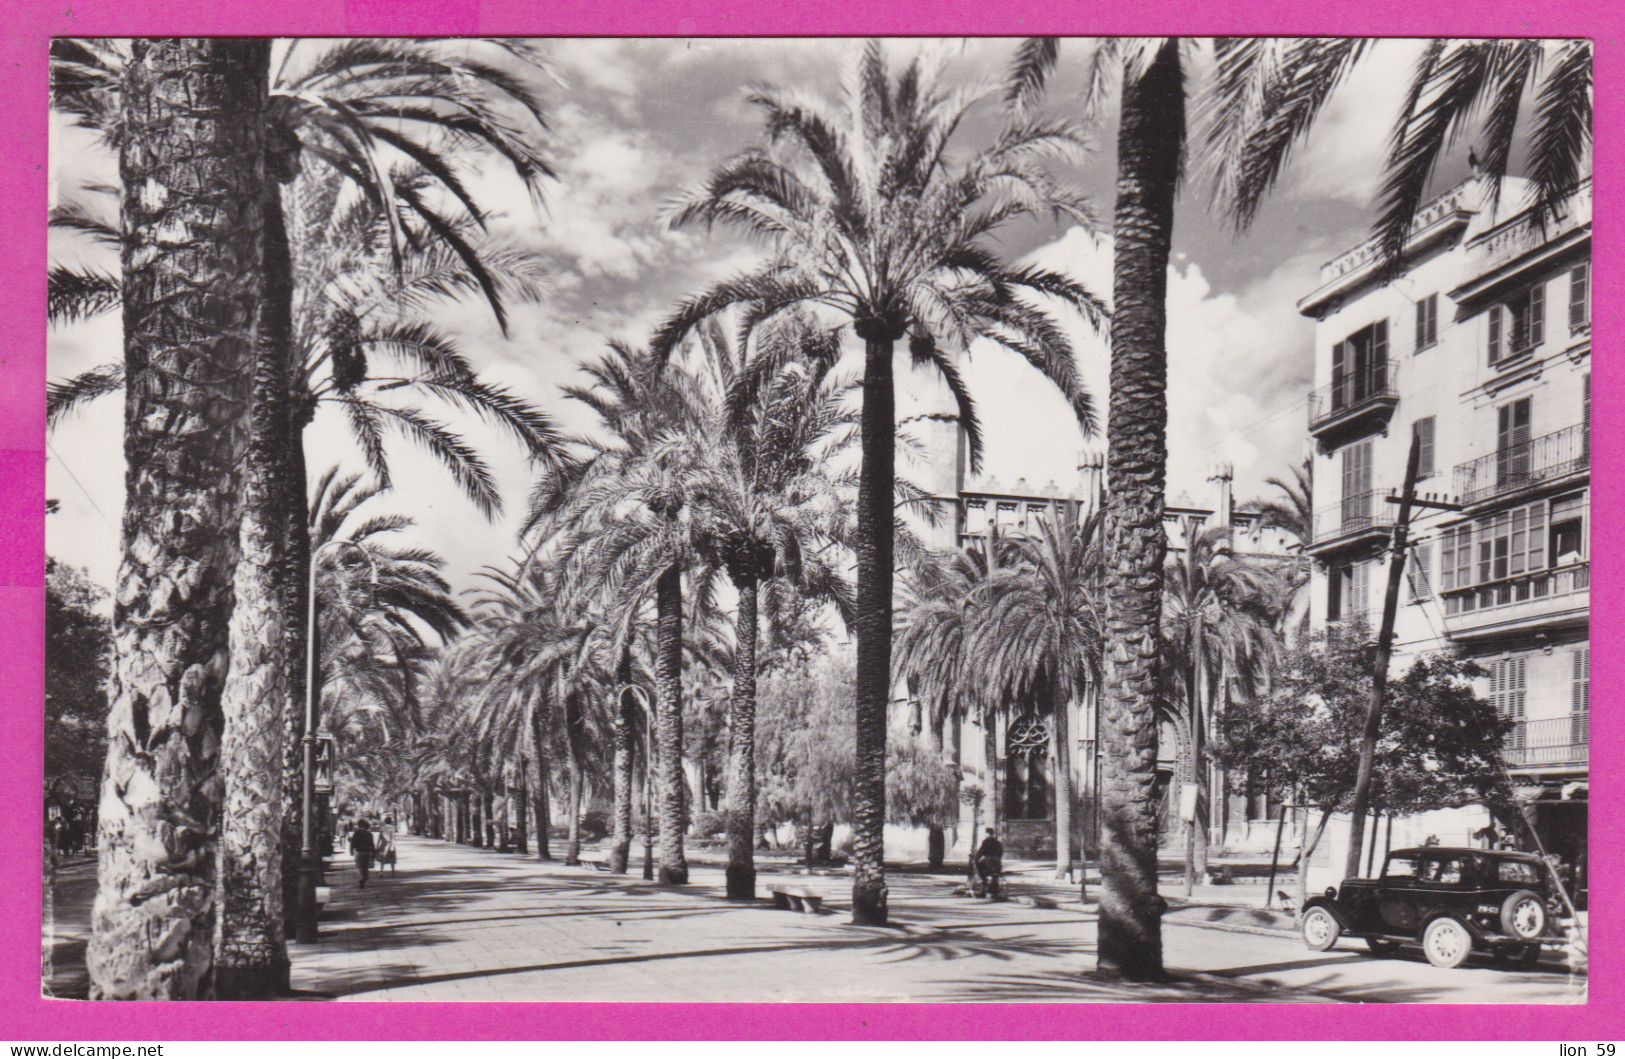 293815 / Spain - Mallorca - Palma Paseo De Sagrera PC 1959 USED 1 Pta General Franco Flamme ".. Ahorros A La Caja Postal - Covers & Documents